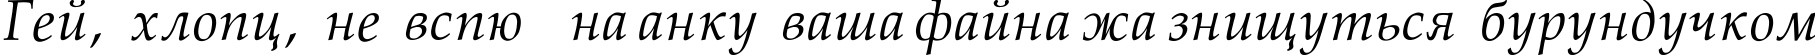 Пример написания шрифтом Palatino-Normal-Italic текста на украинском